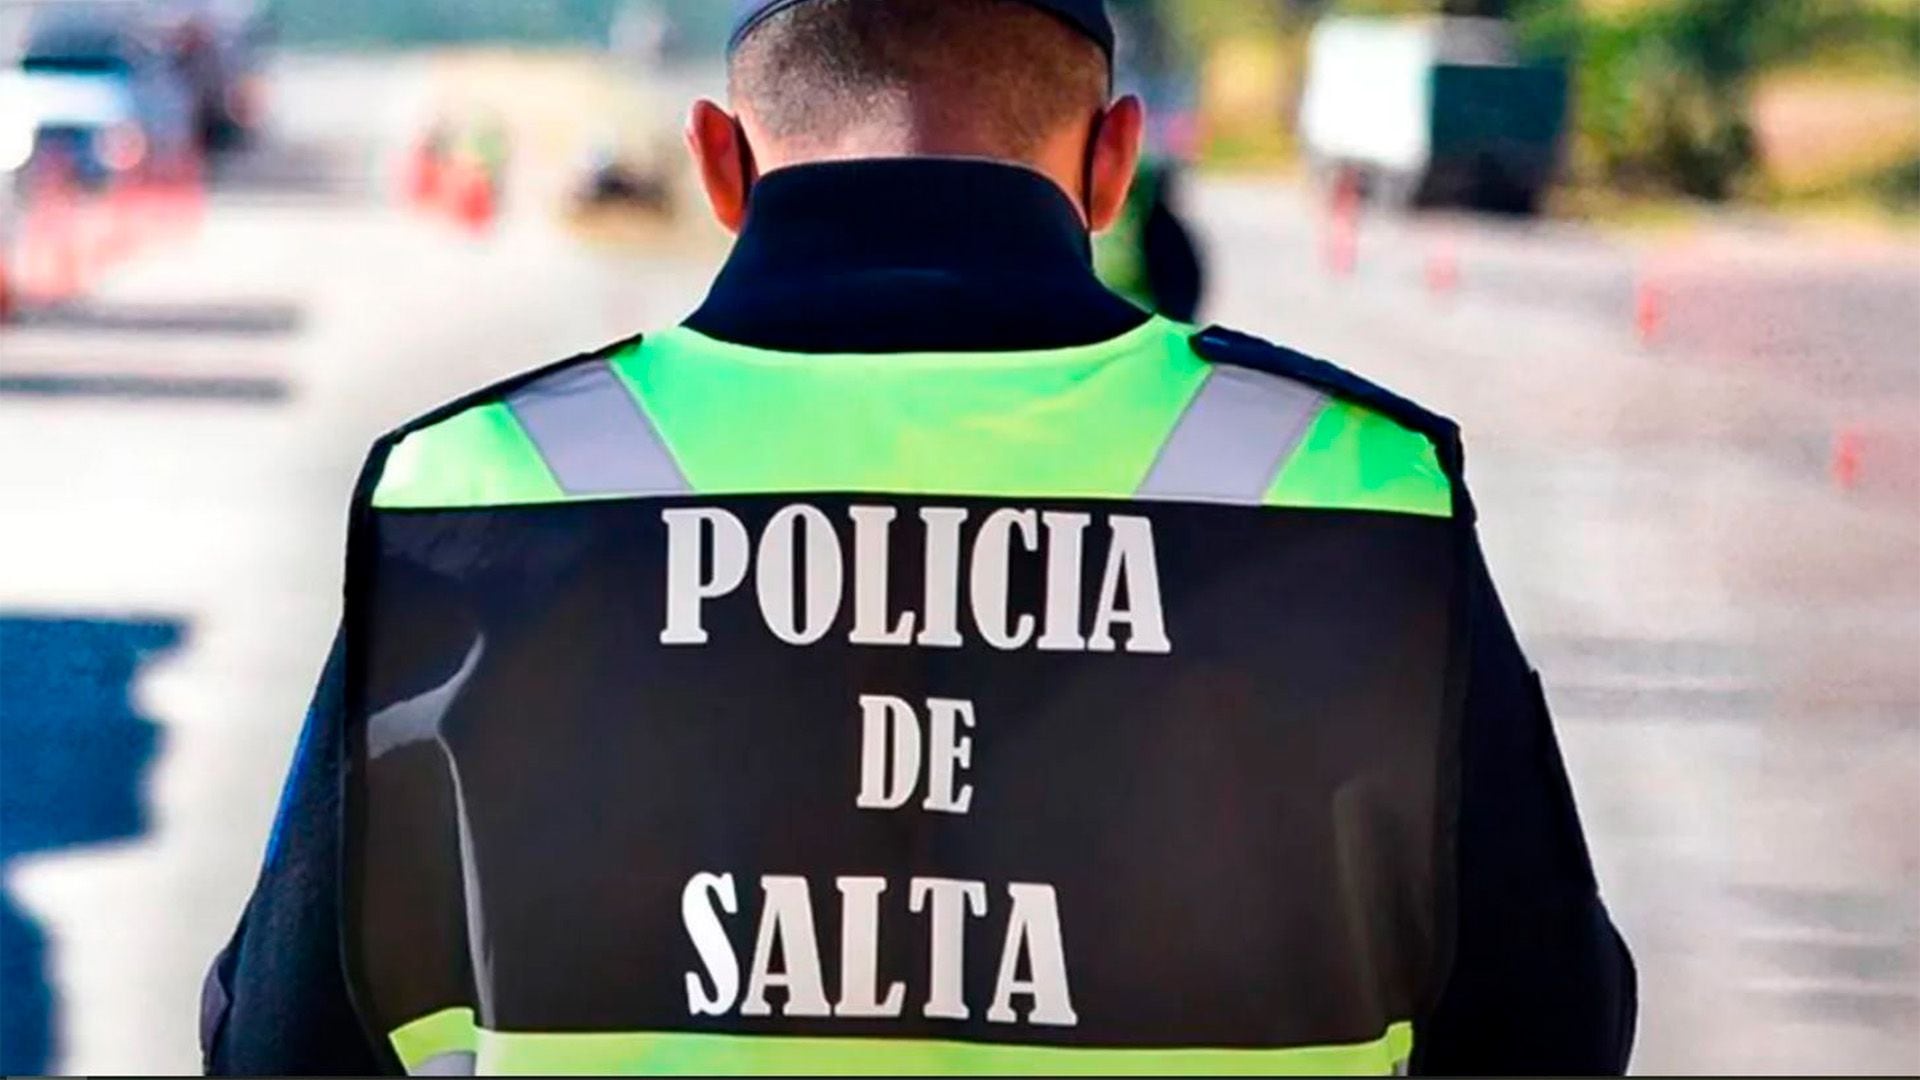 Policía de Salta